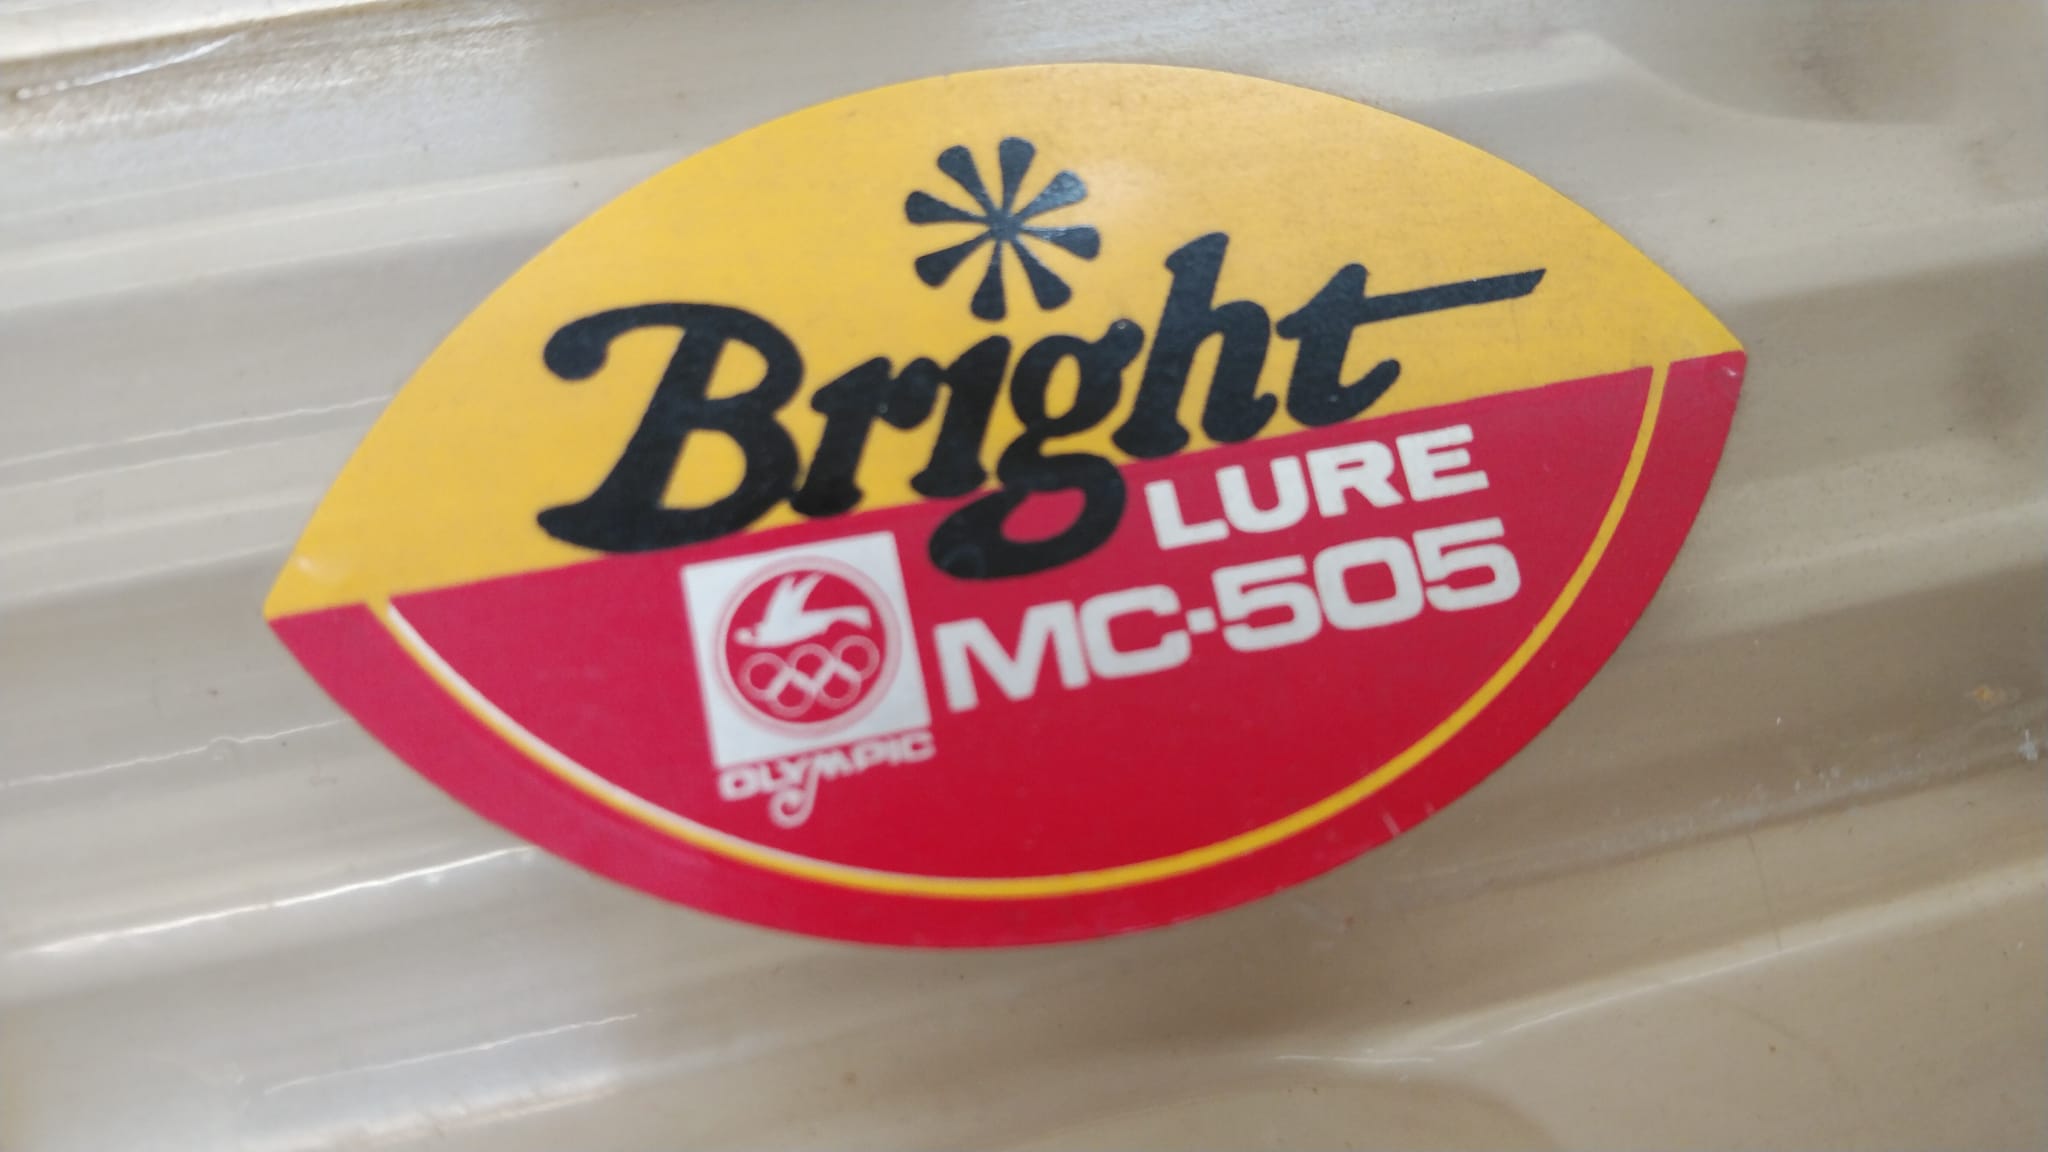 Bright  LURE MC505 OLYMPIC